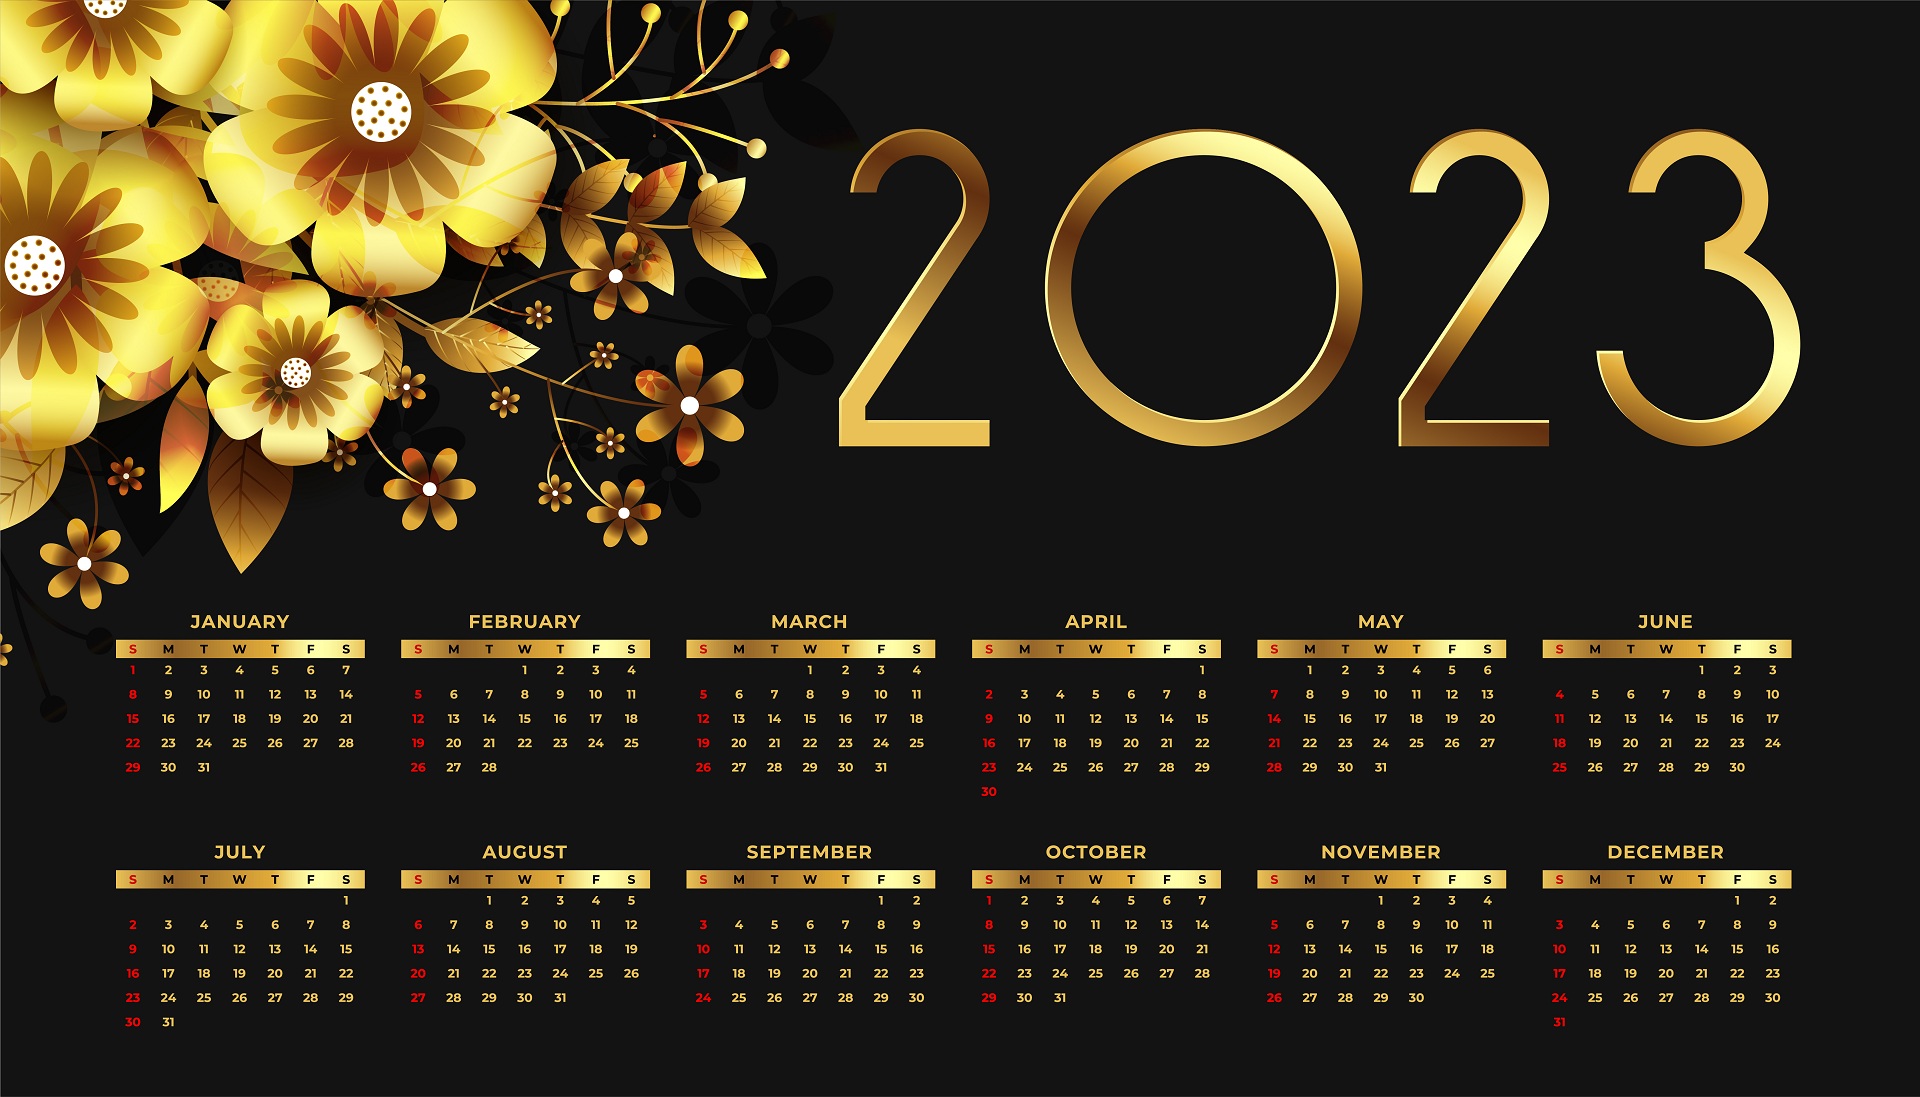 custom calendar 2023 wallpaper